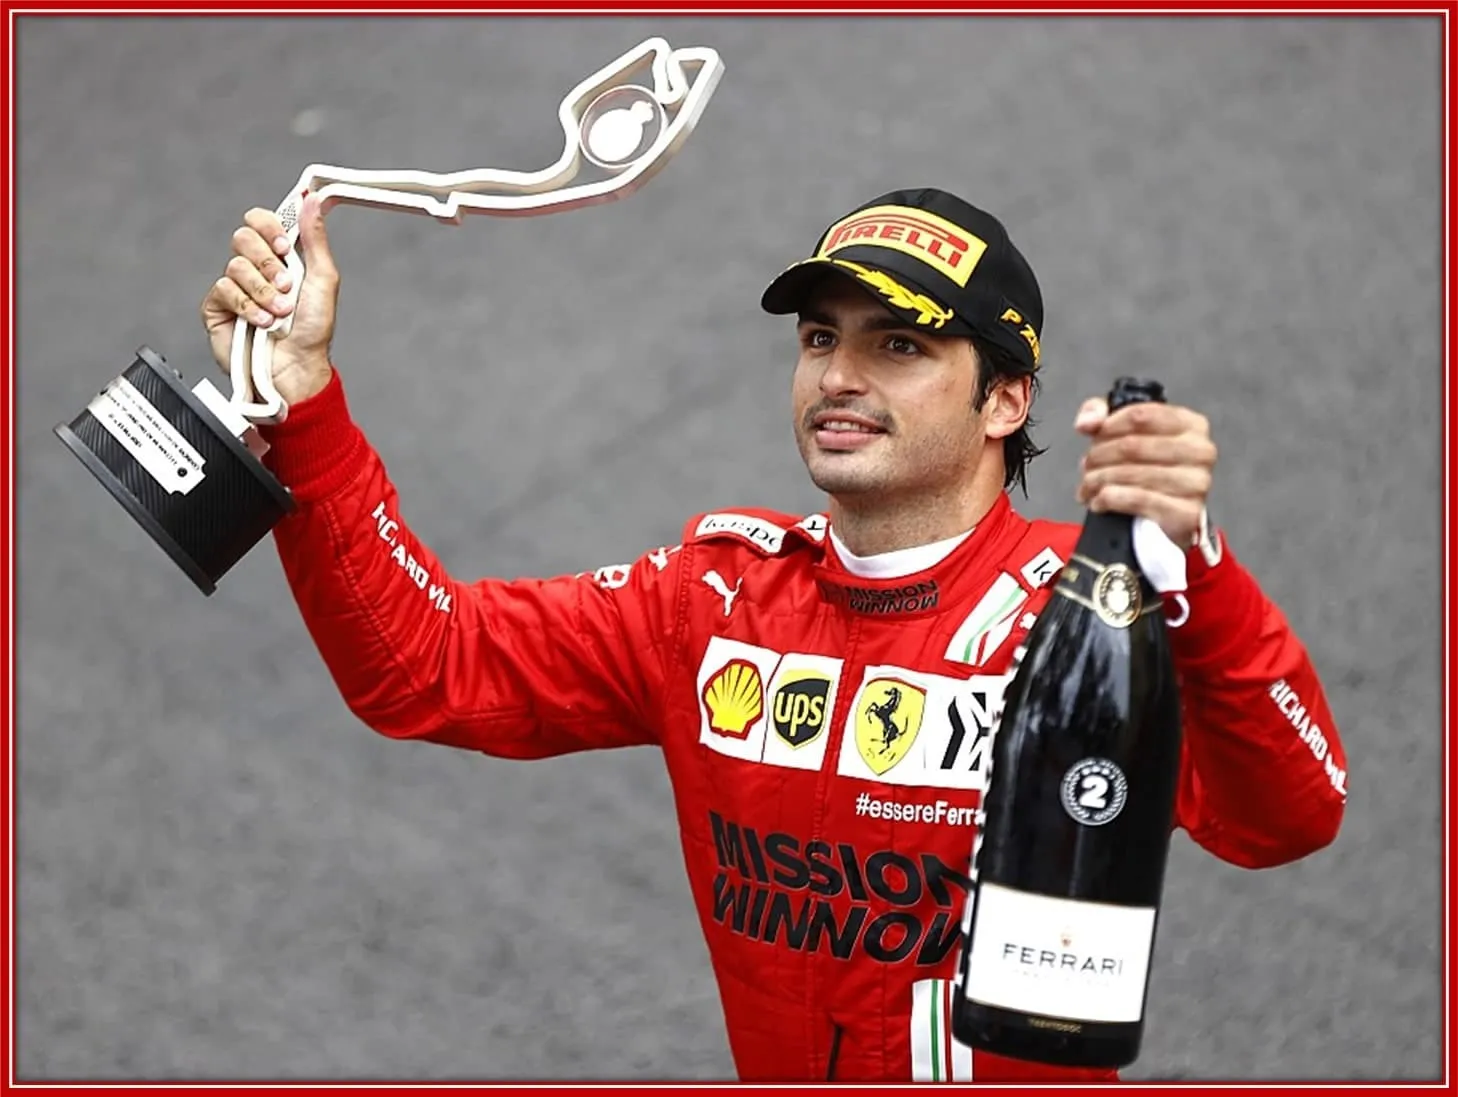 Carlos Sainz celebrating his podium finish at the 2021 Monaco Grand Prix.